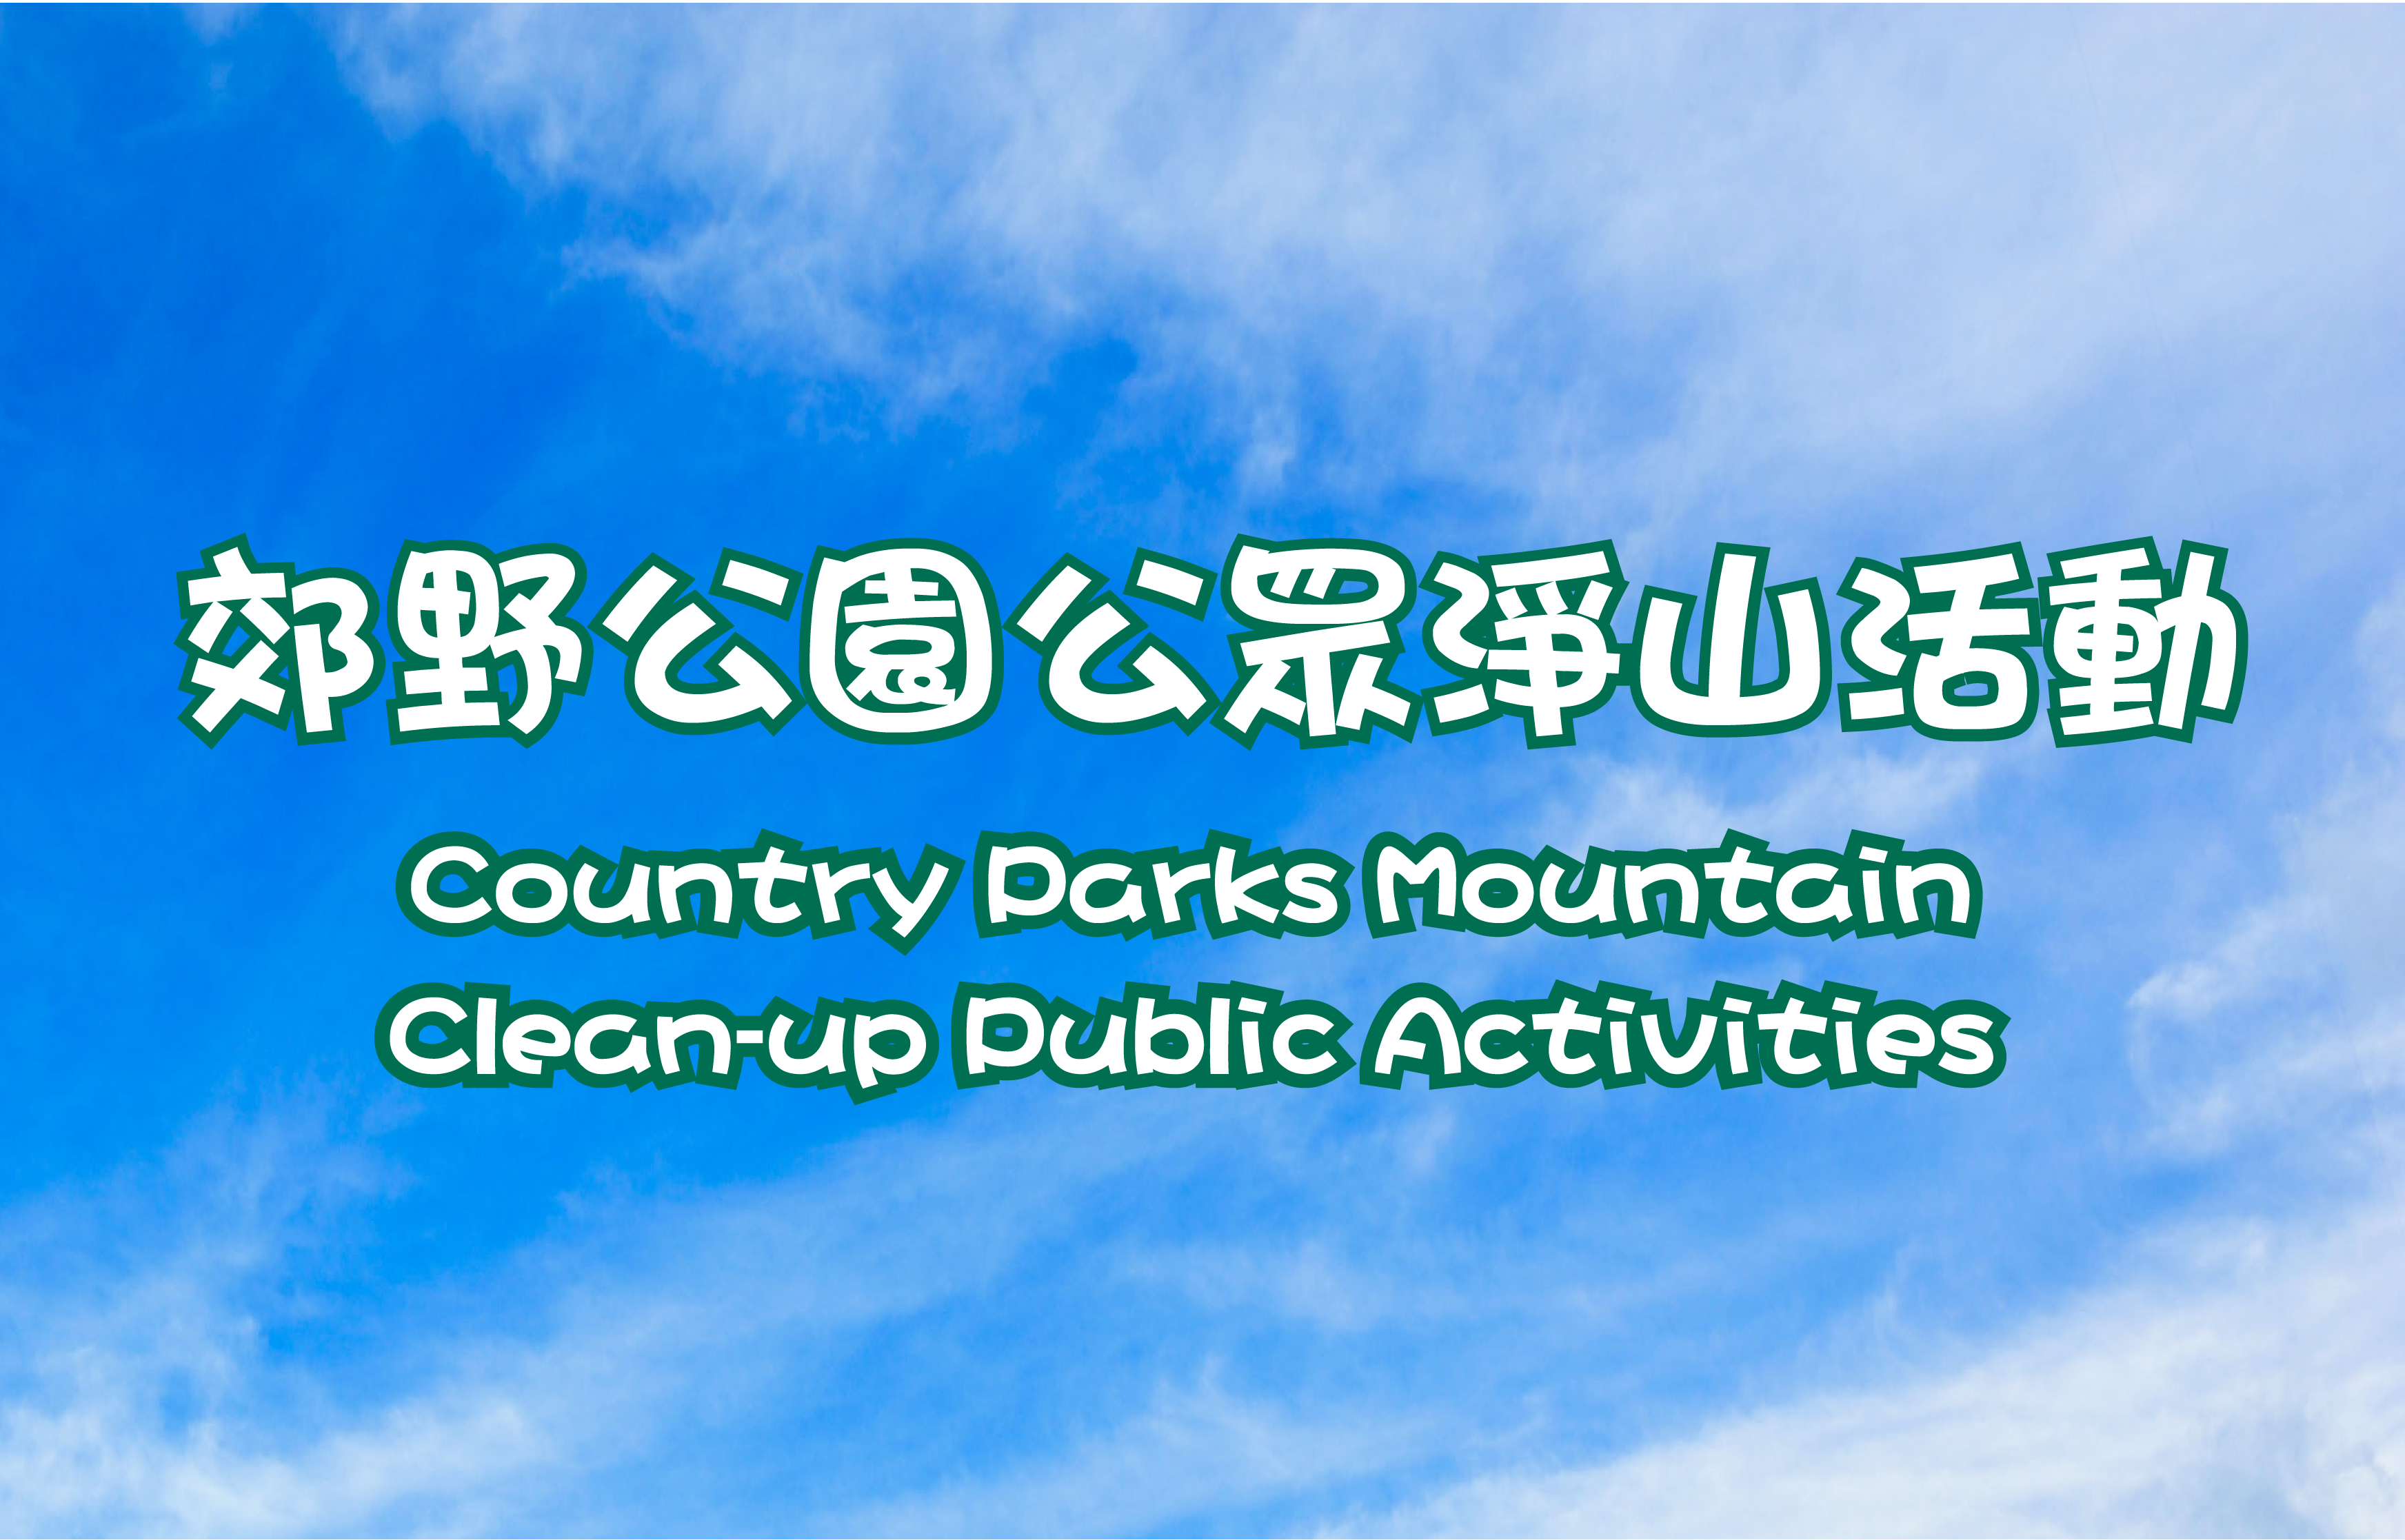 Country Parks Mountain Clean-up Public Acitivites